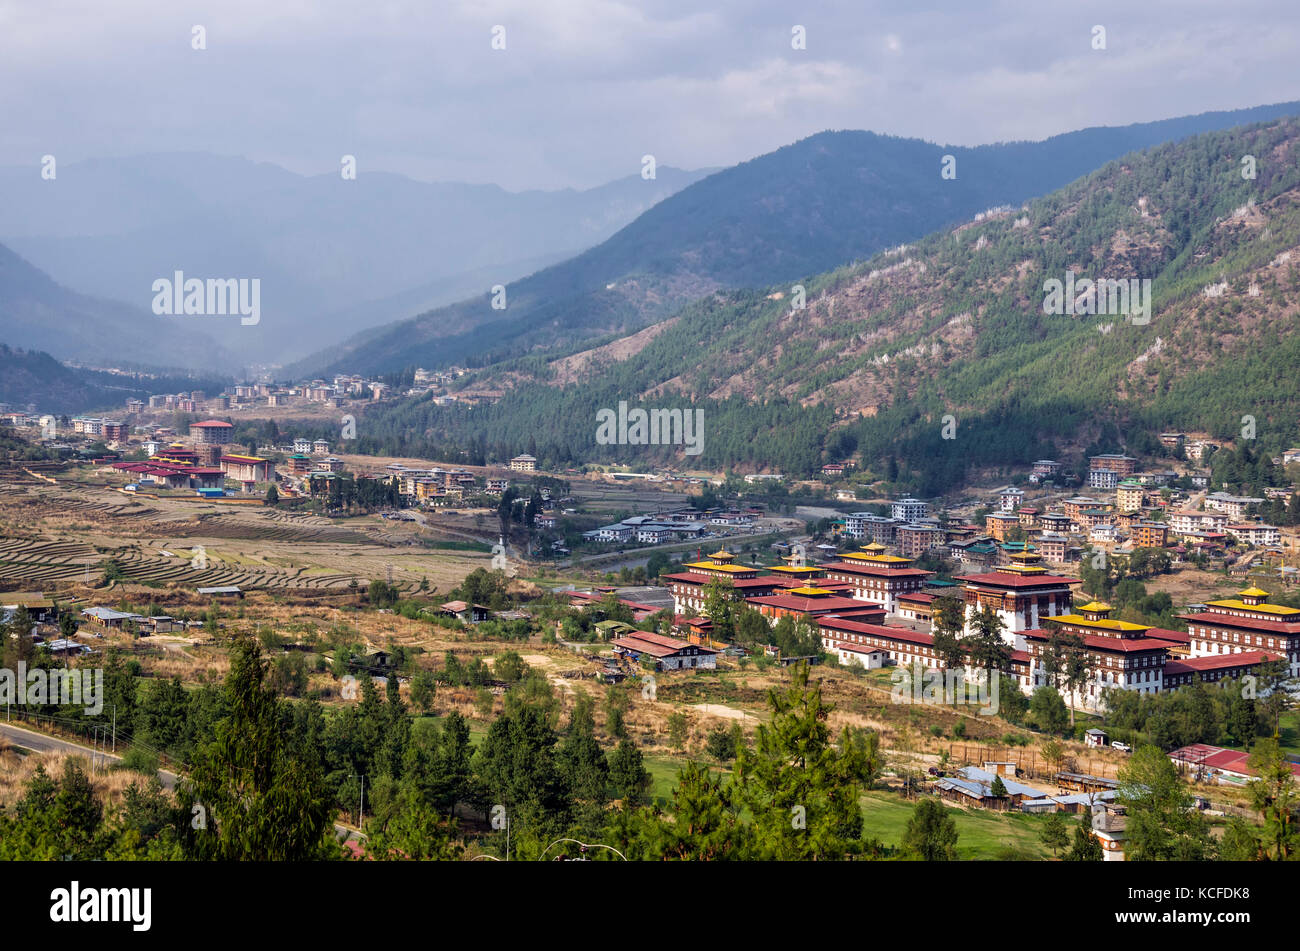 Trashi Chhoe Dzong and landscape of paddy farm villages, Thimphu, Bhutan - Trashi Chhoe Dzong, royal palace and headquarter of the monastic order. Stock Photo